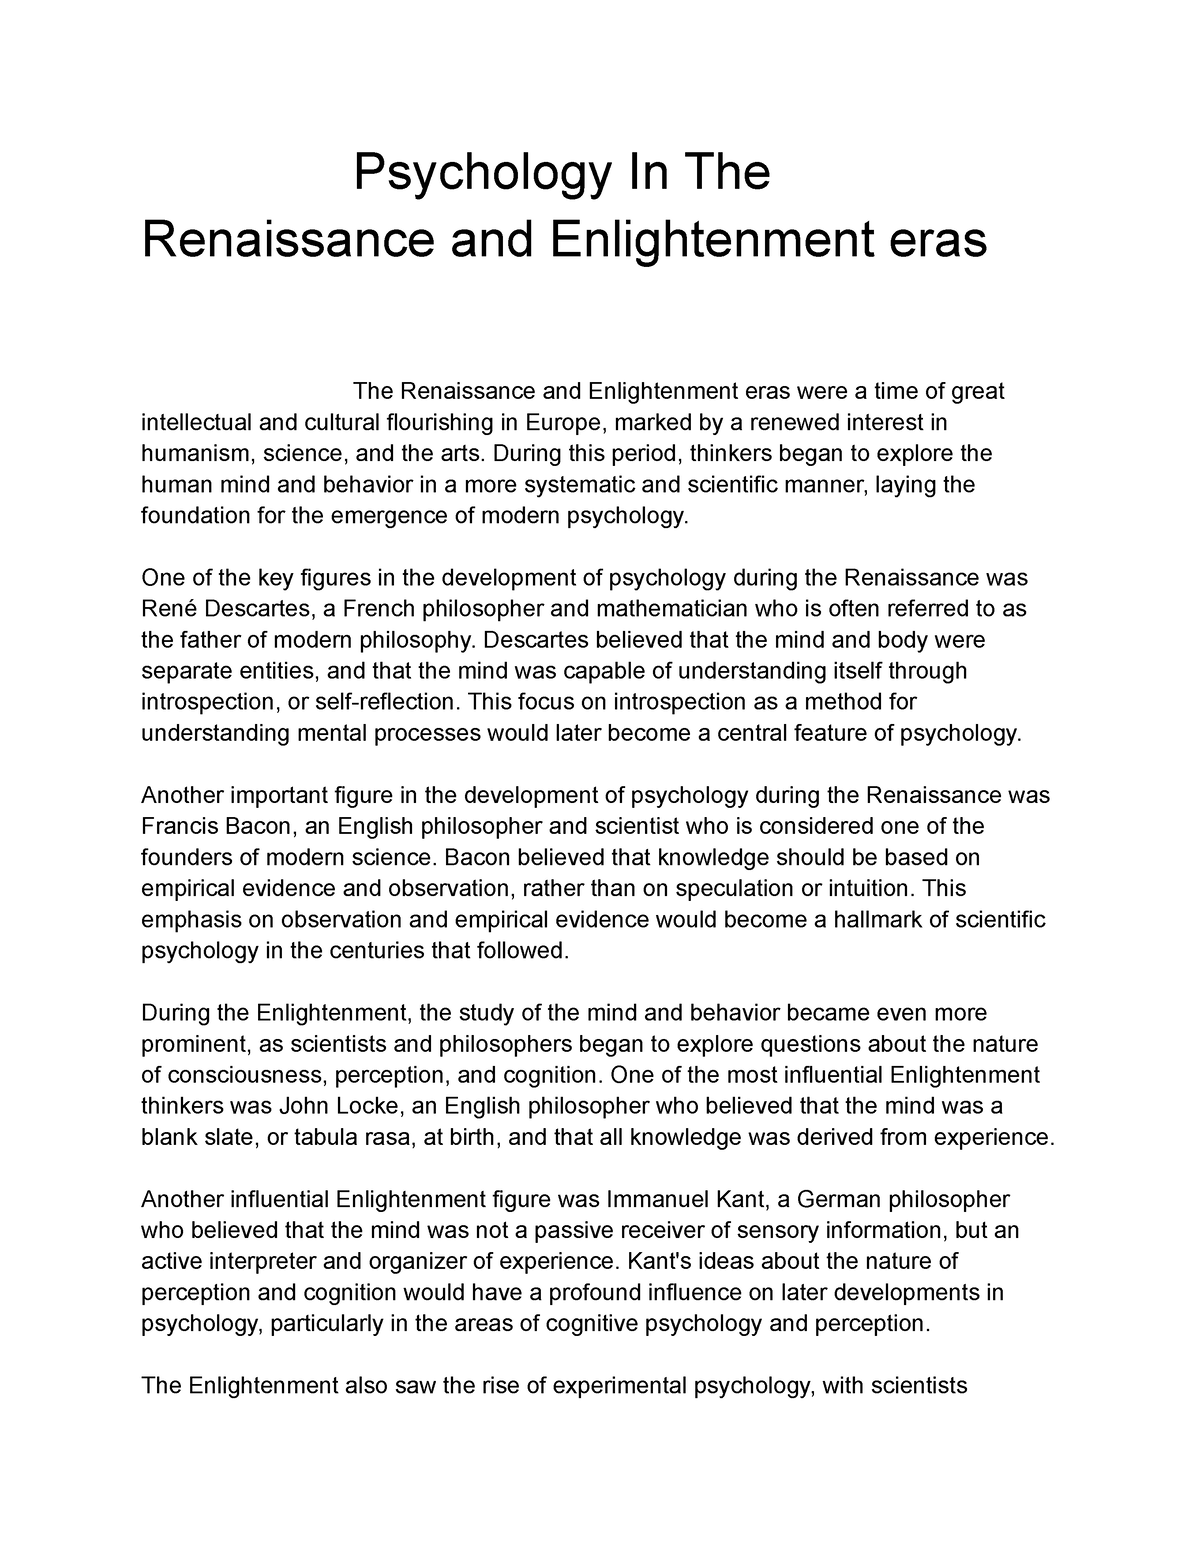 renaissance to enlightenment essay